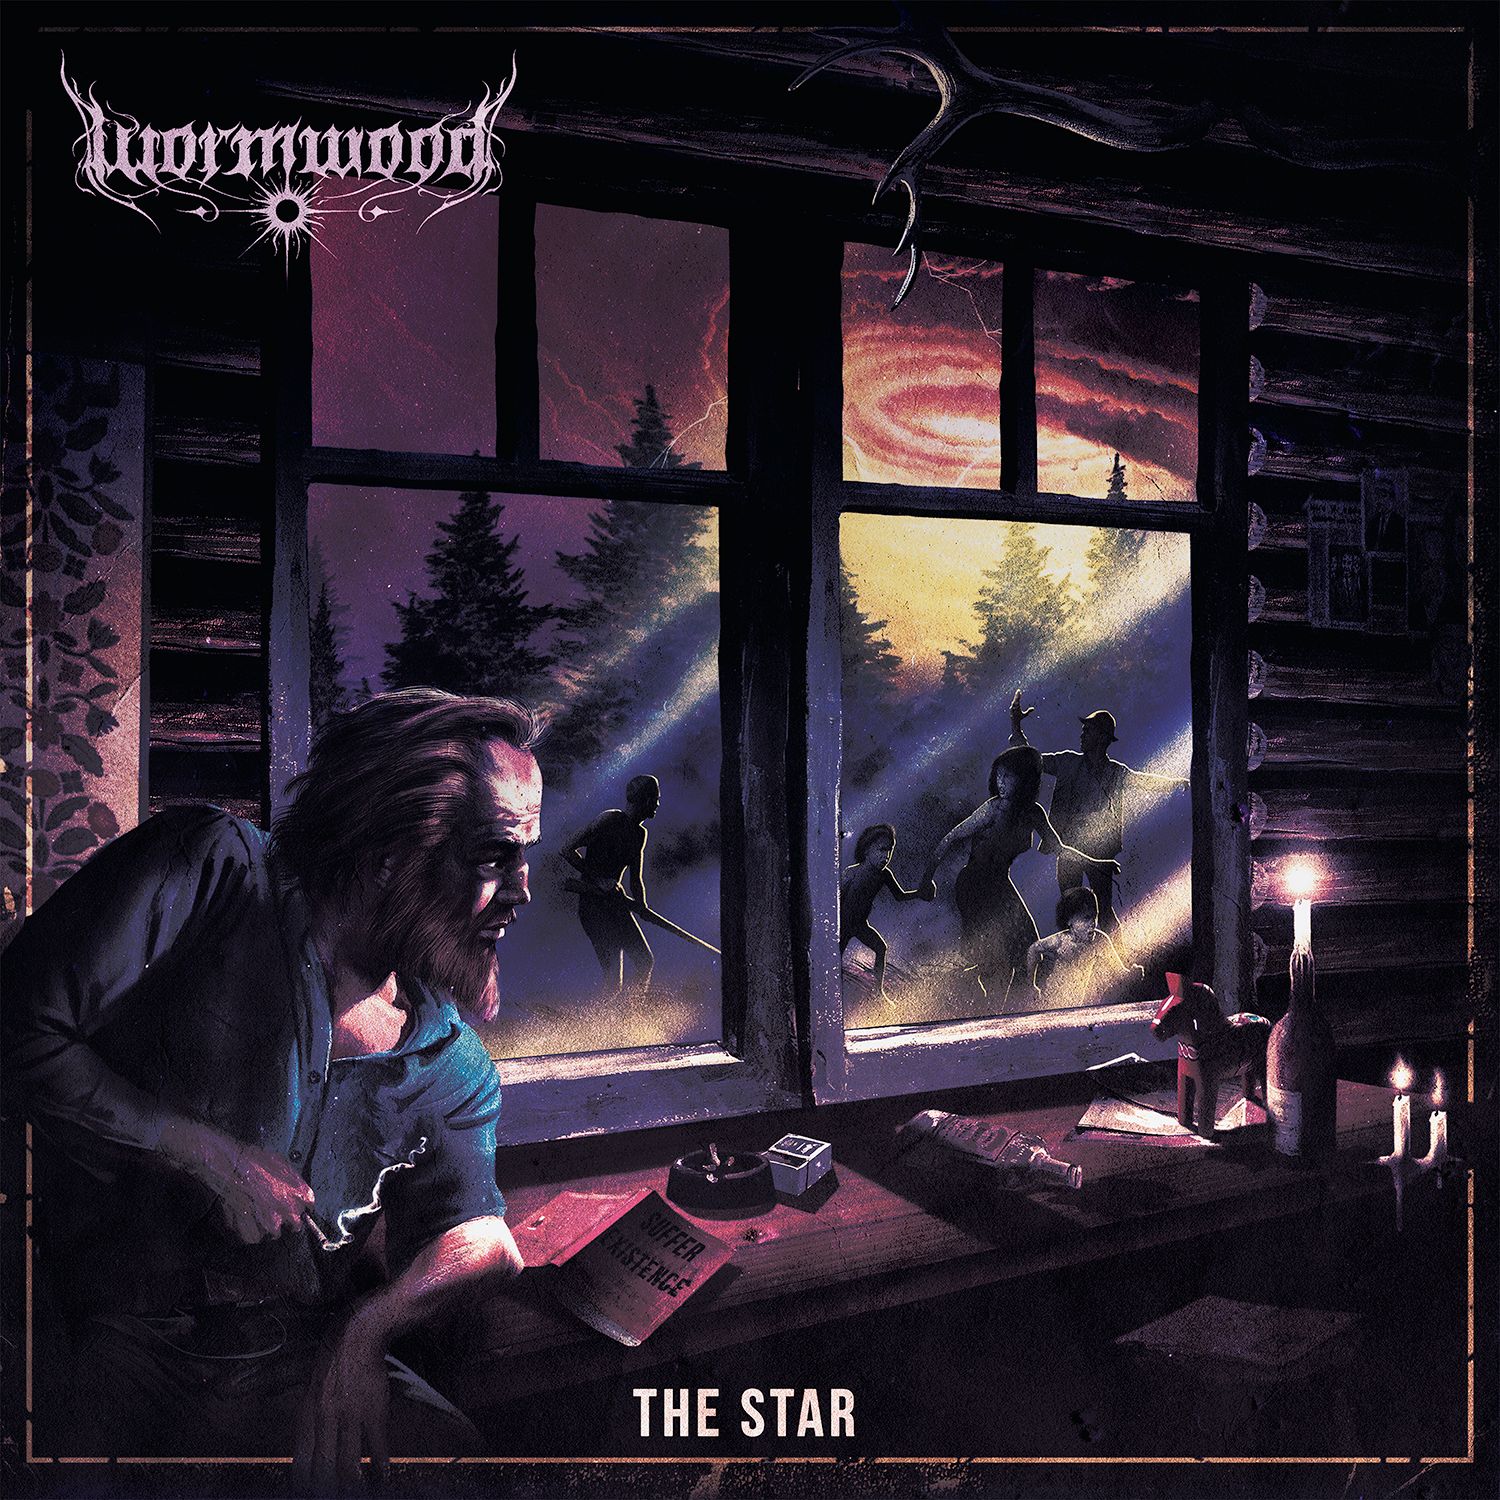 Wormwood - "The Star"